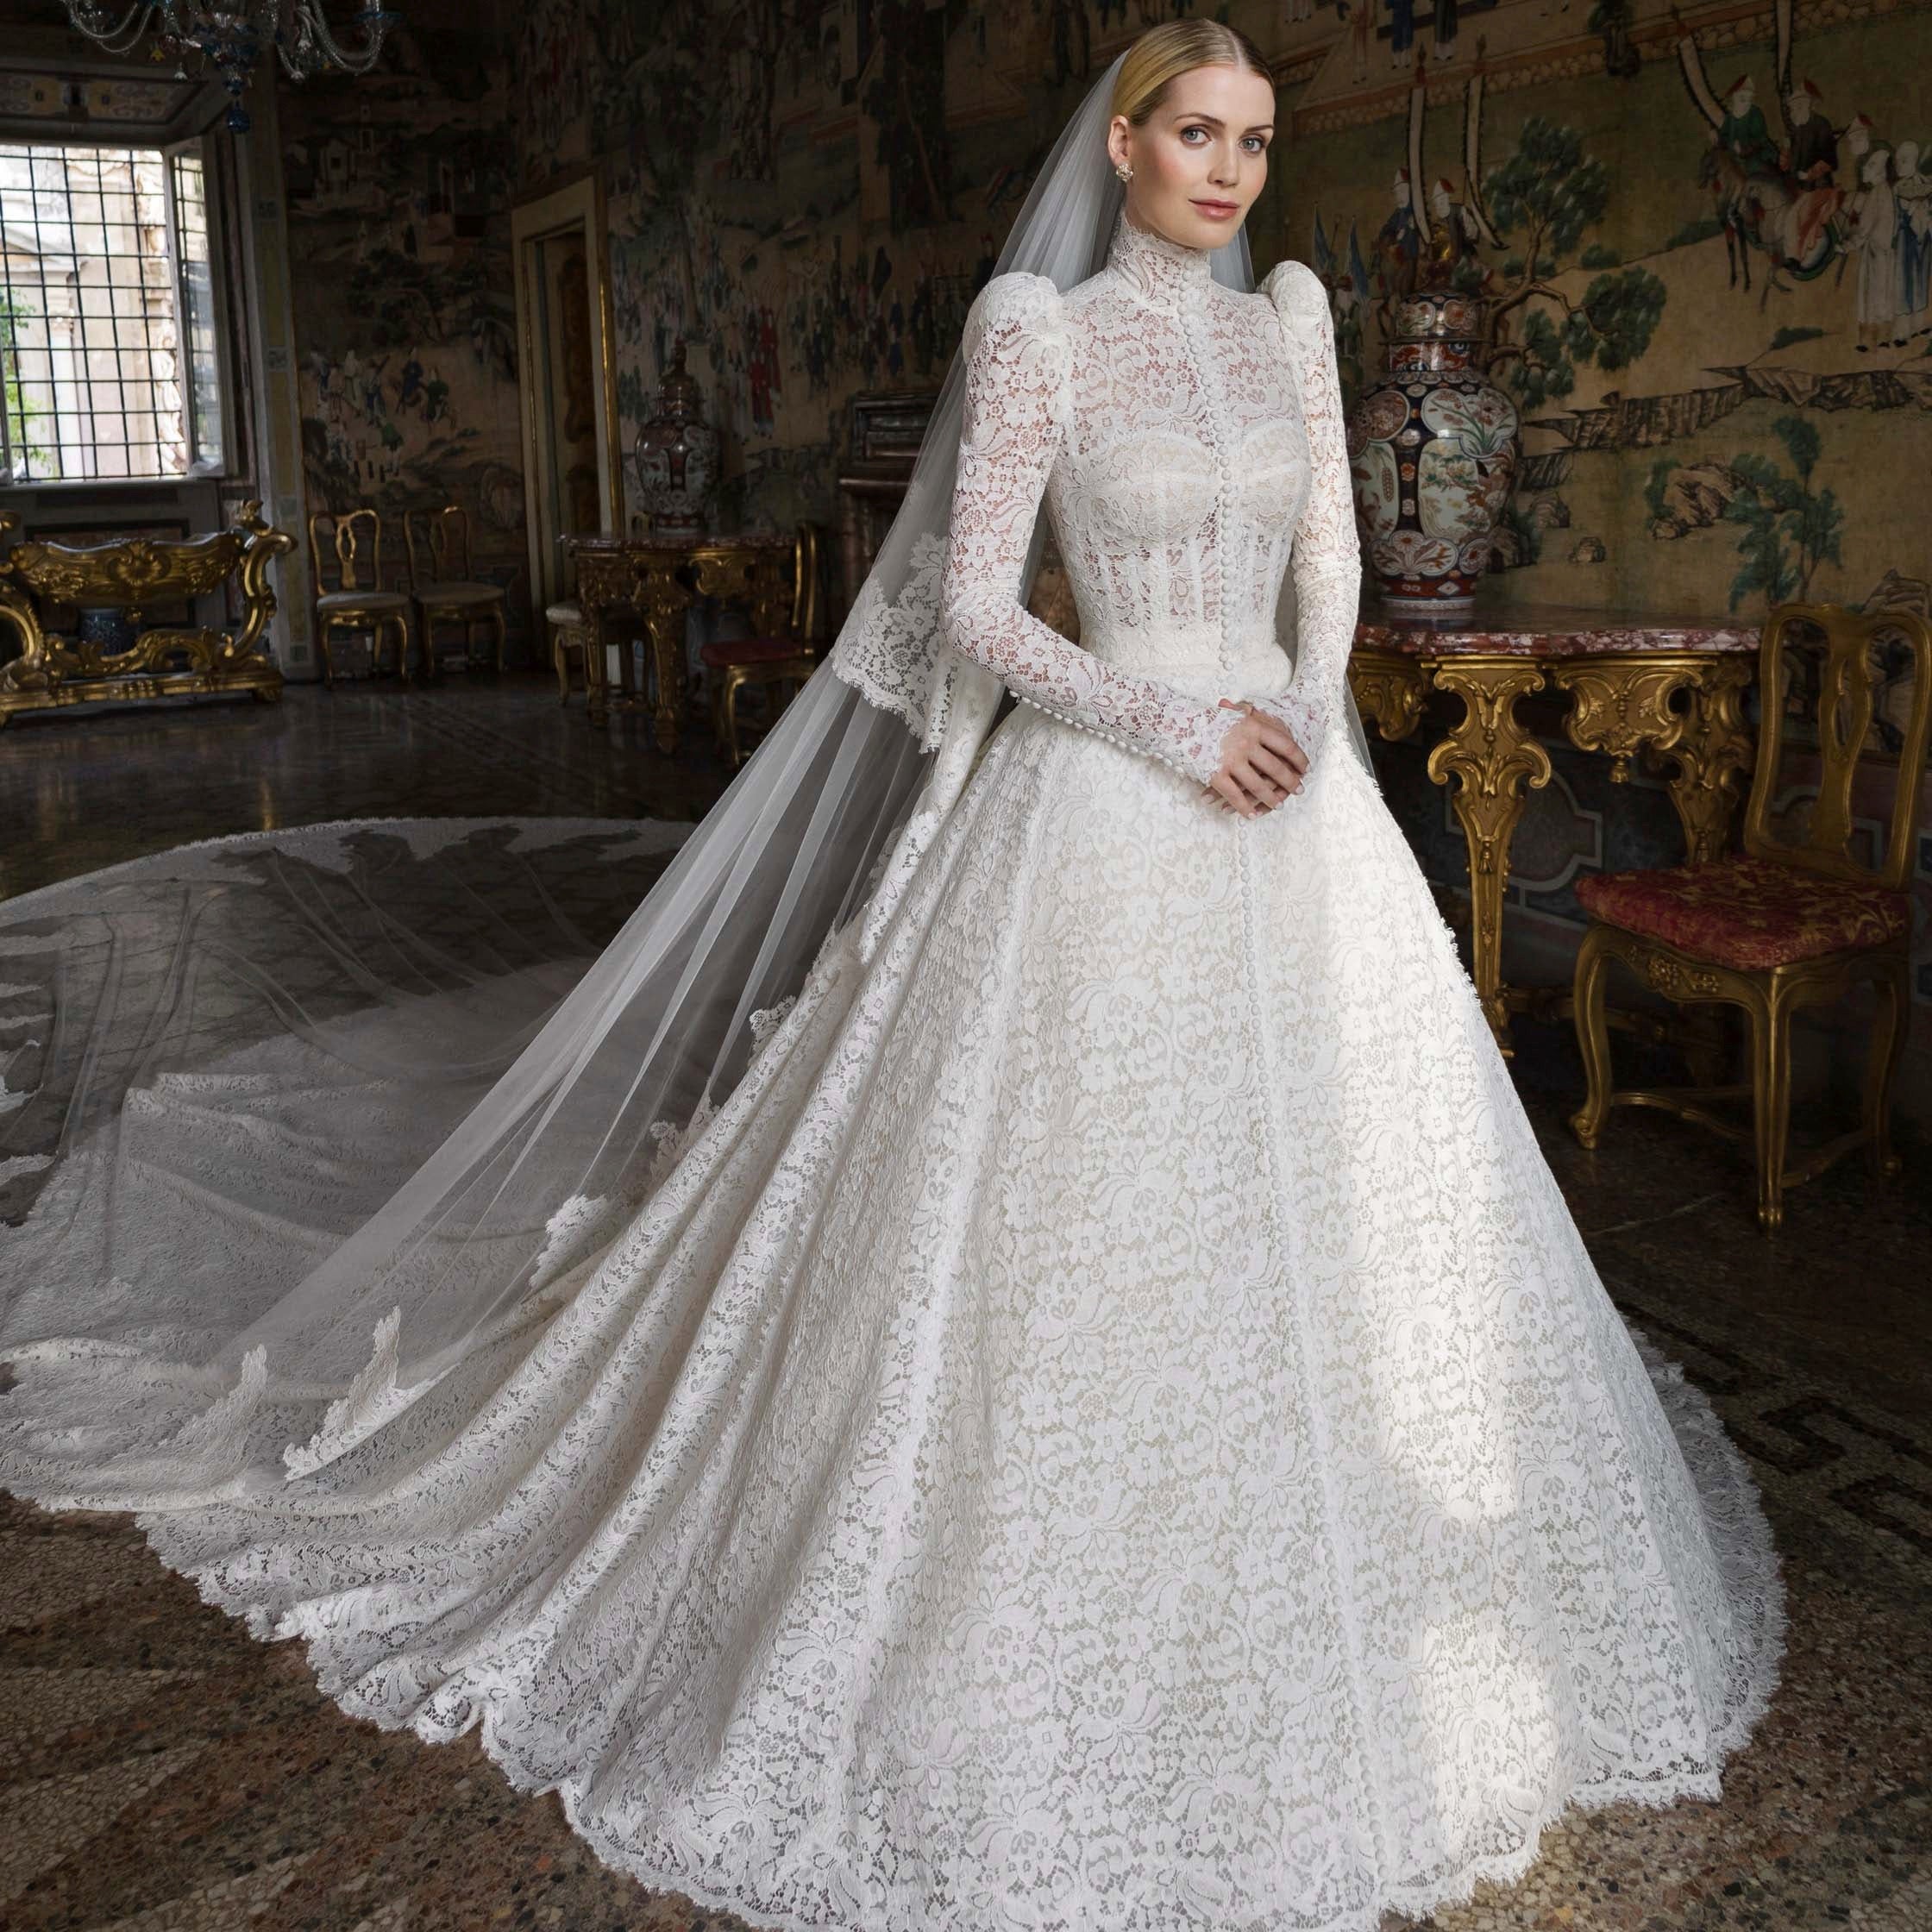 Kitty Spencer's wedding dresses by Dolce & Gabbana